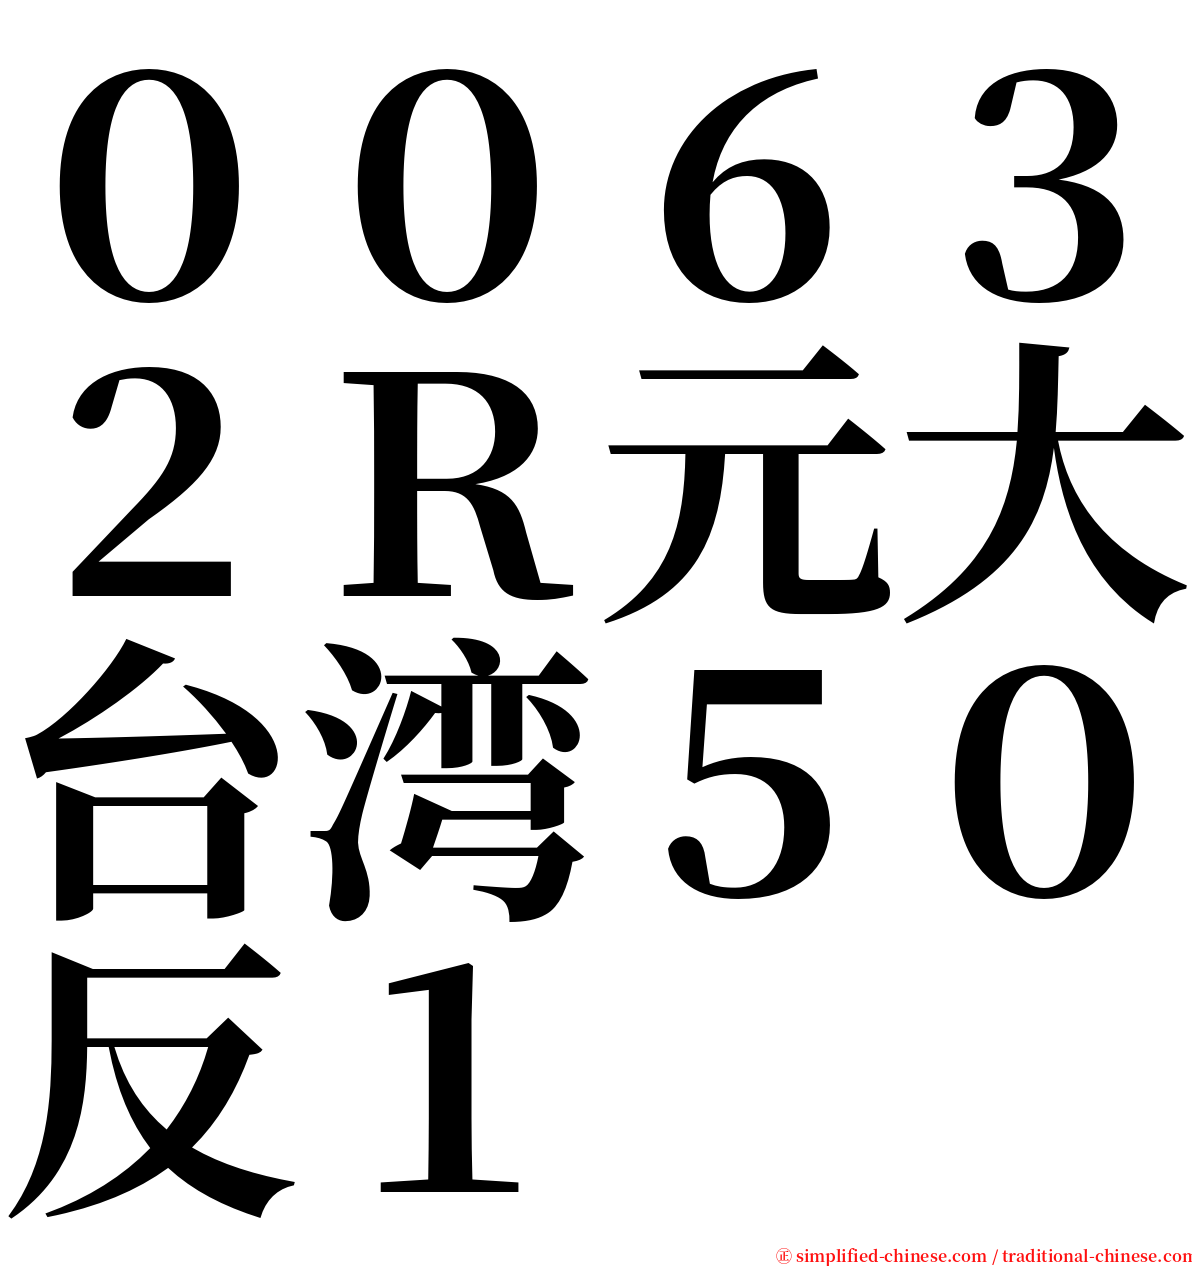 ００６３２Ｒ元大台湾５０反１ serif font